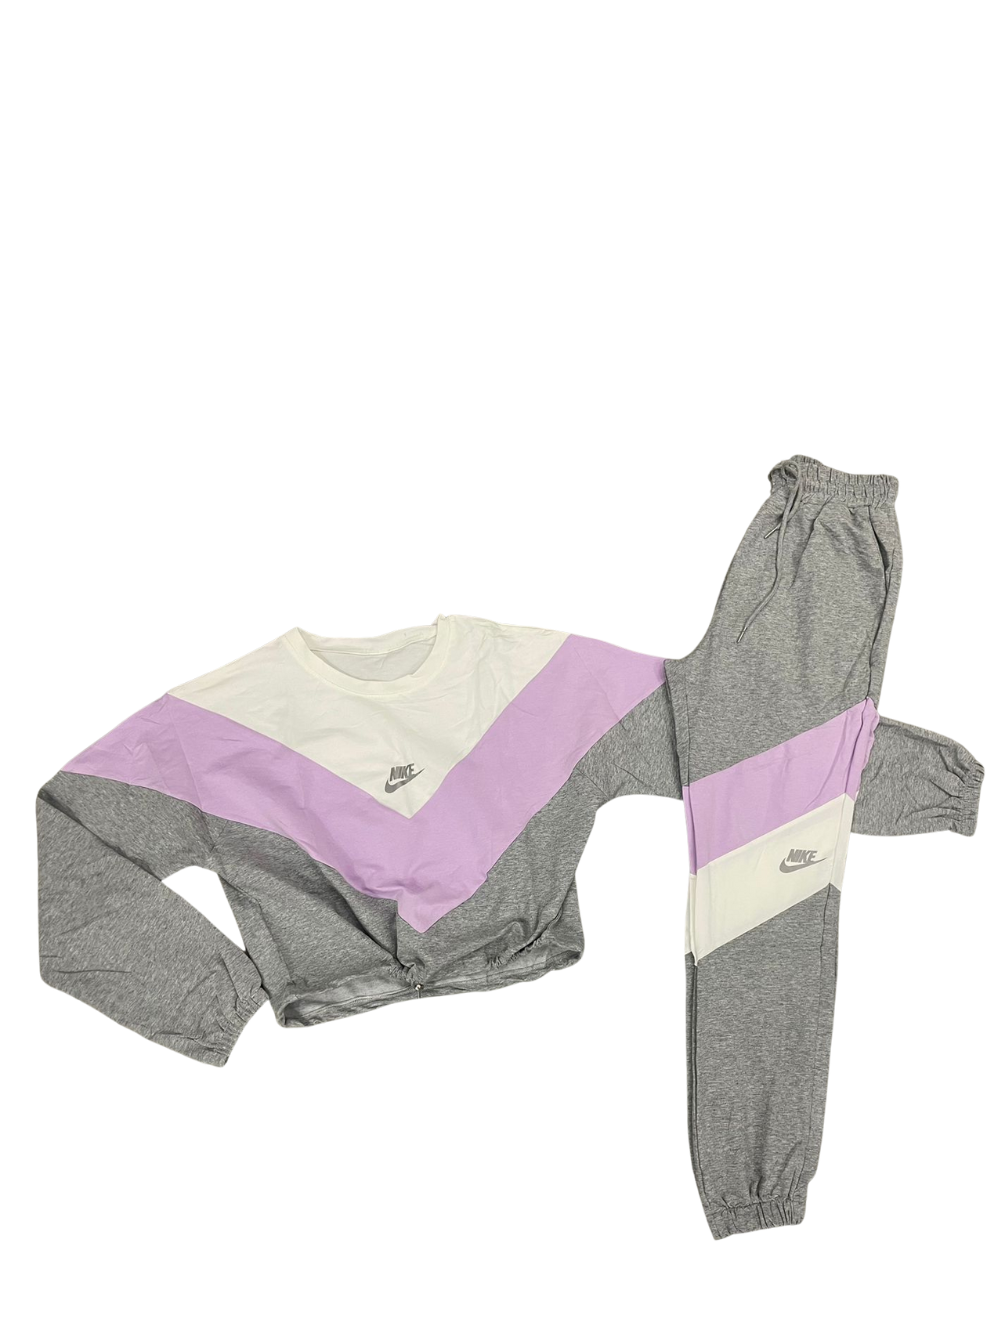 N370 Nike Pants de mujer gris lila